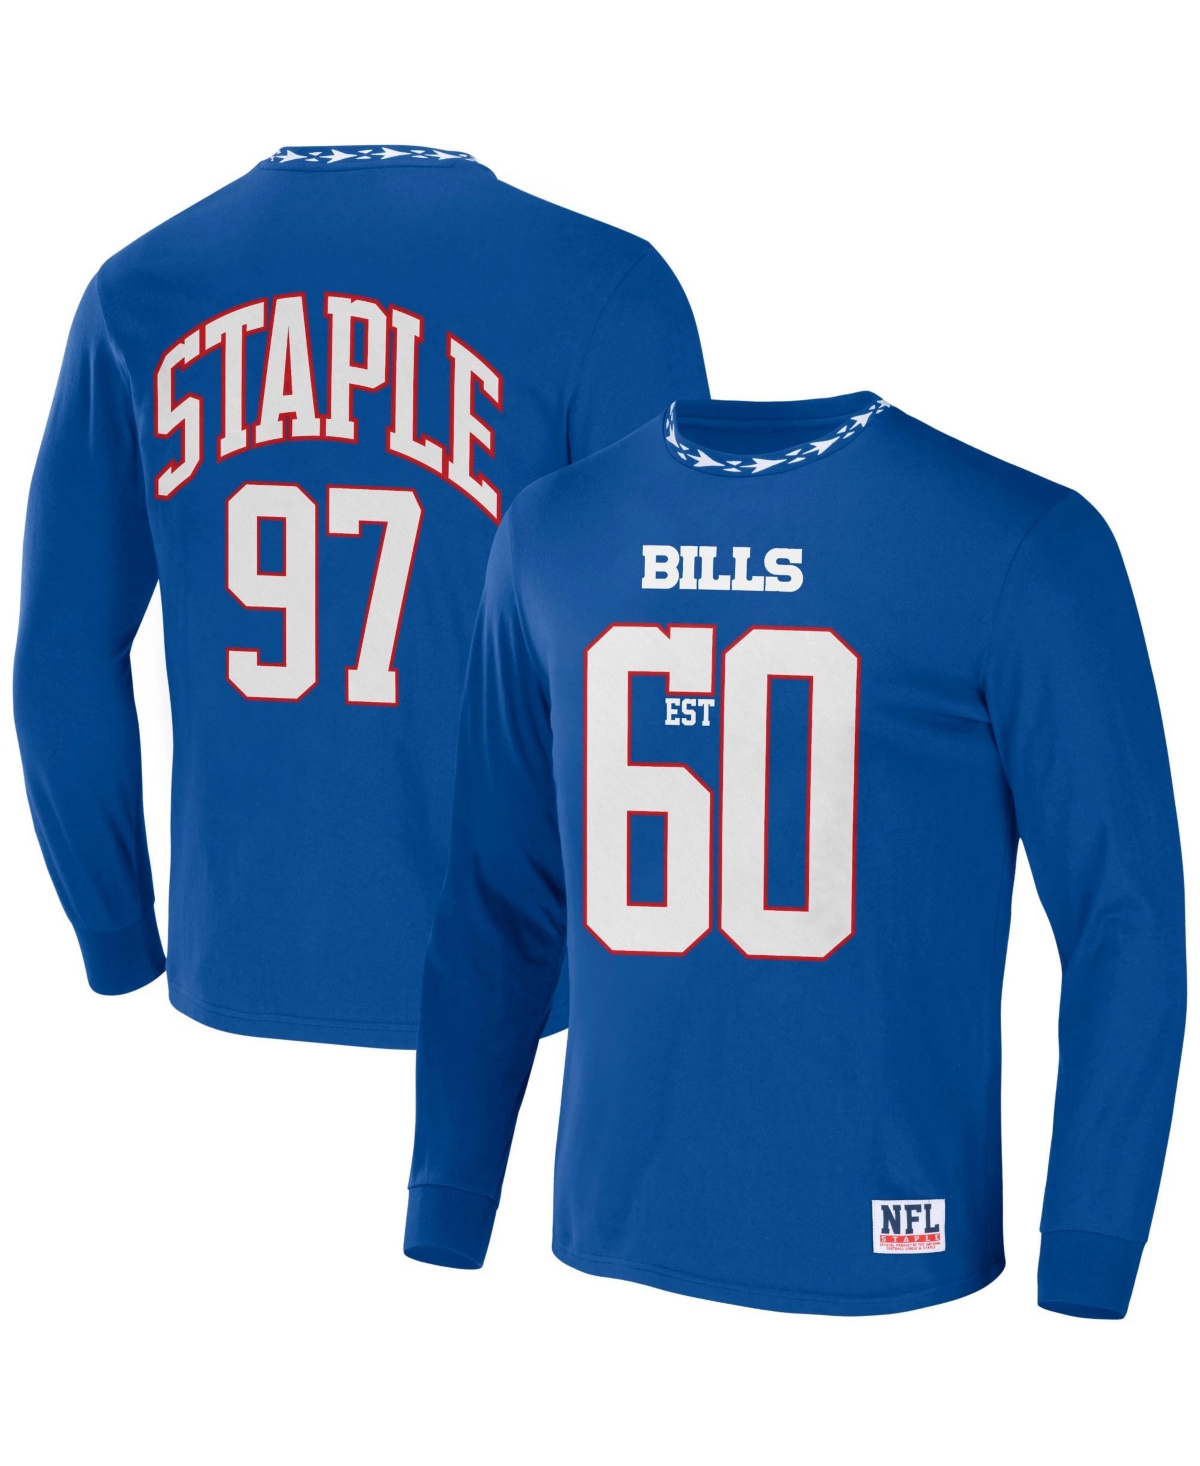 Men's Nfl X Staple Royal Buffalo Bills Core Long Sleeve Jersey Style T-shirt - Royal